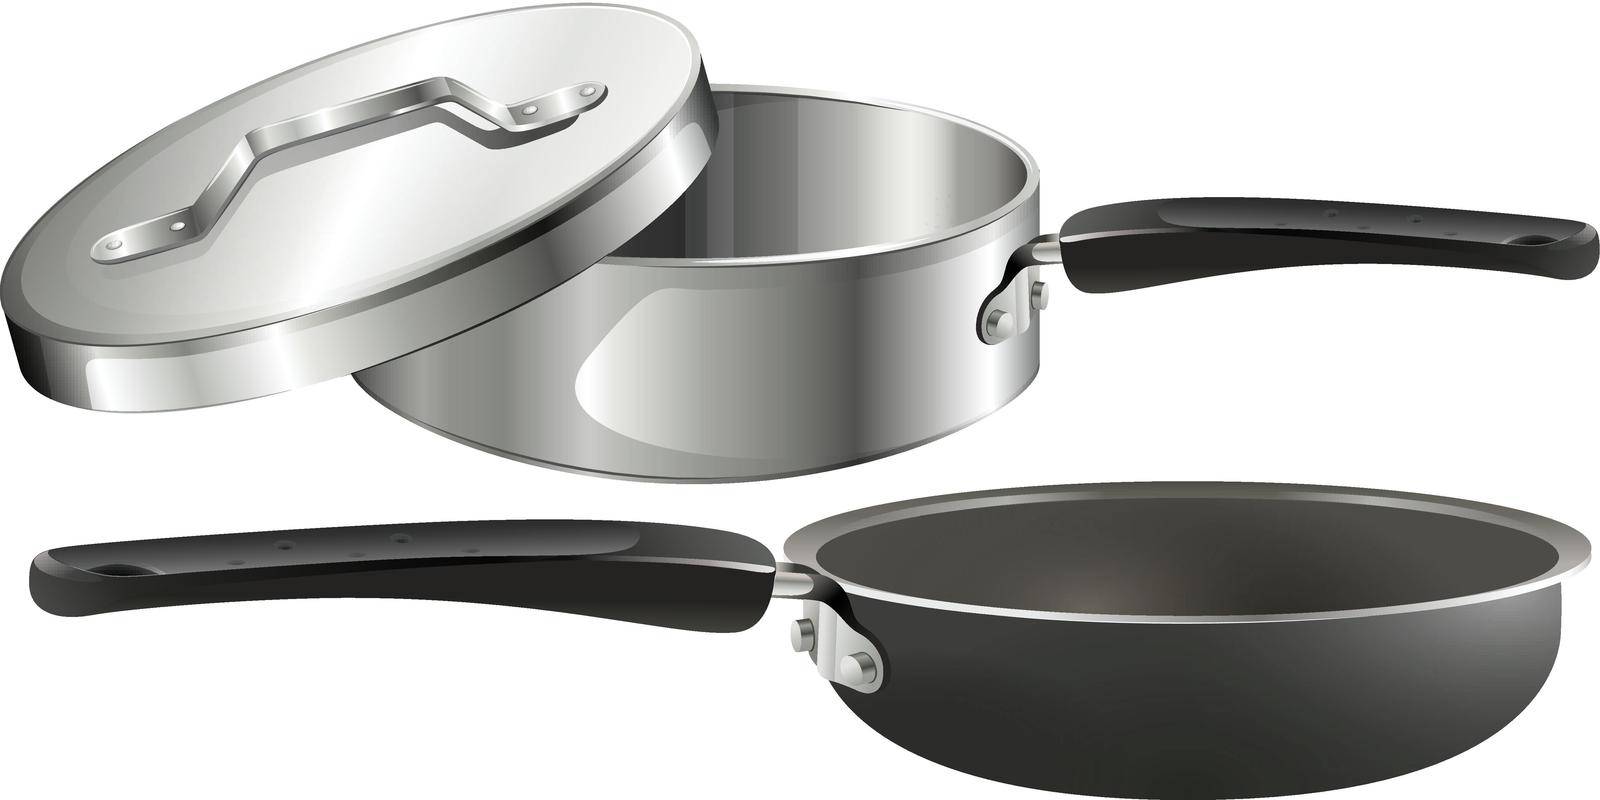 Saucer pan and frying pan illustration